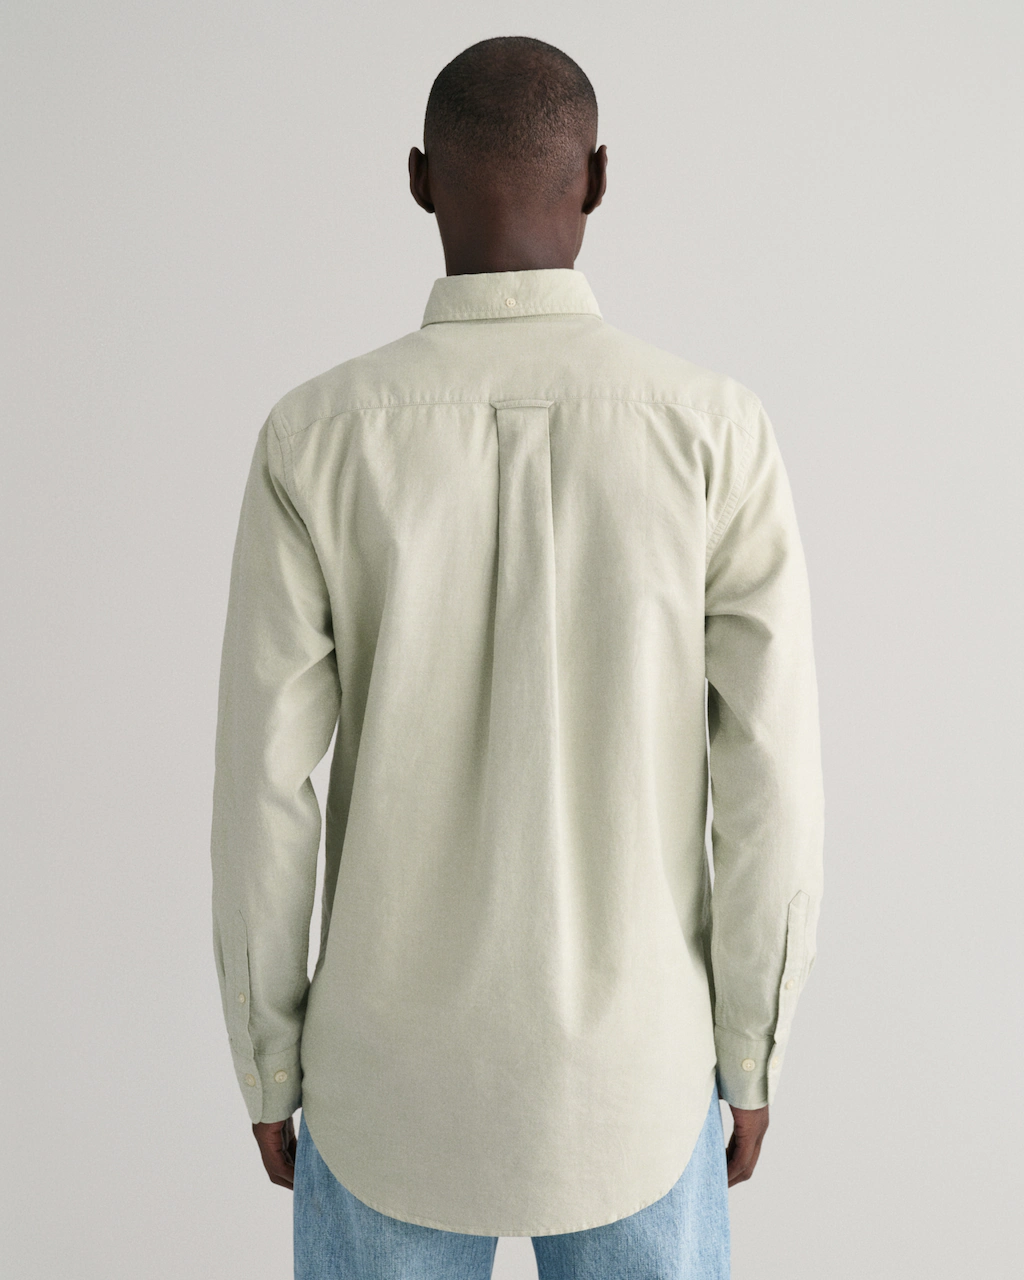 Gant Businesshemd Regular Fit Oxford Hemd strukturiert langlebig dicker Oxf günstig online kaufen